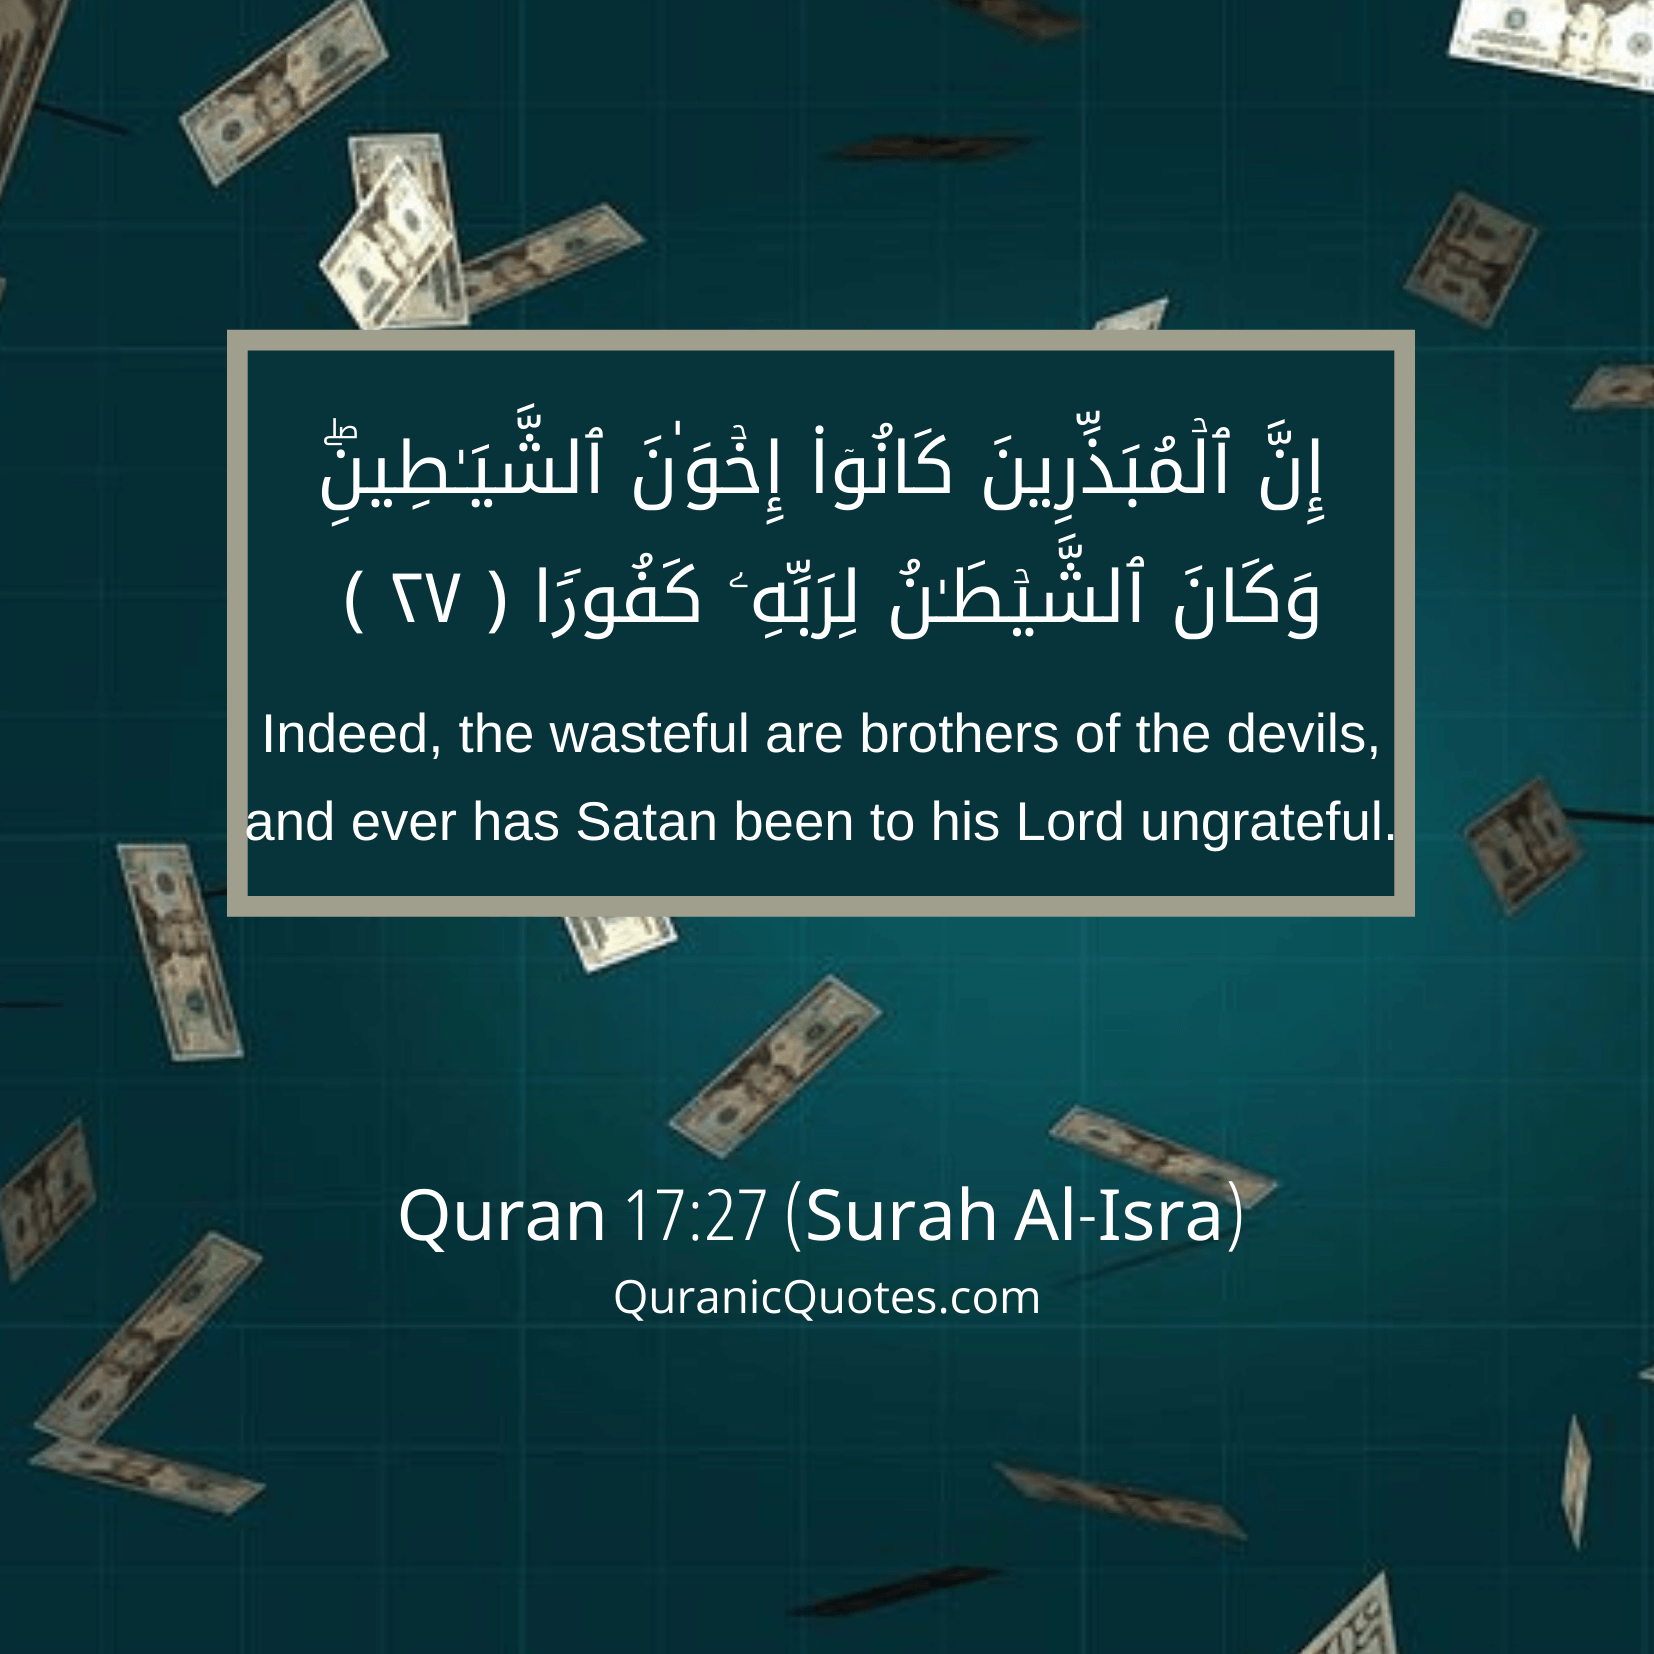 Quranic Quotes in English 401